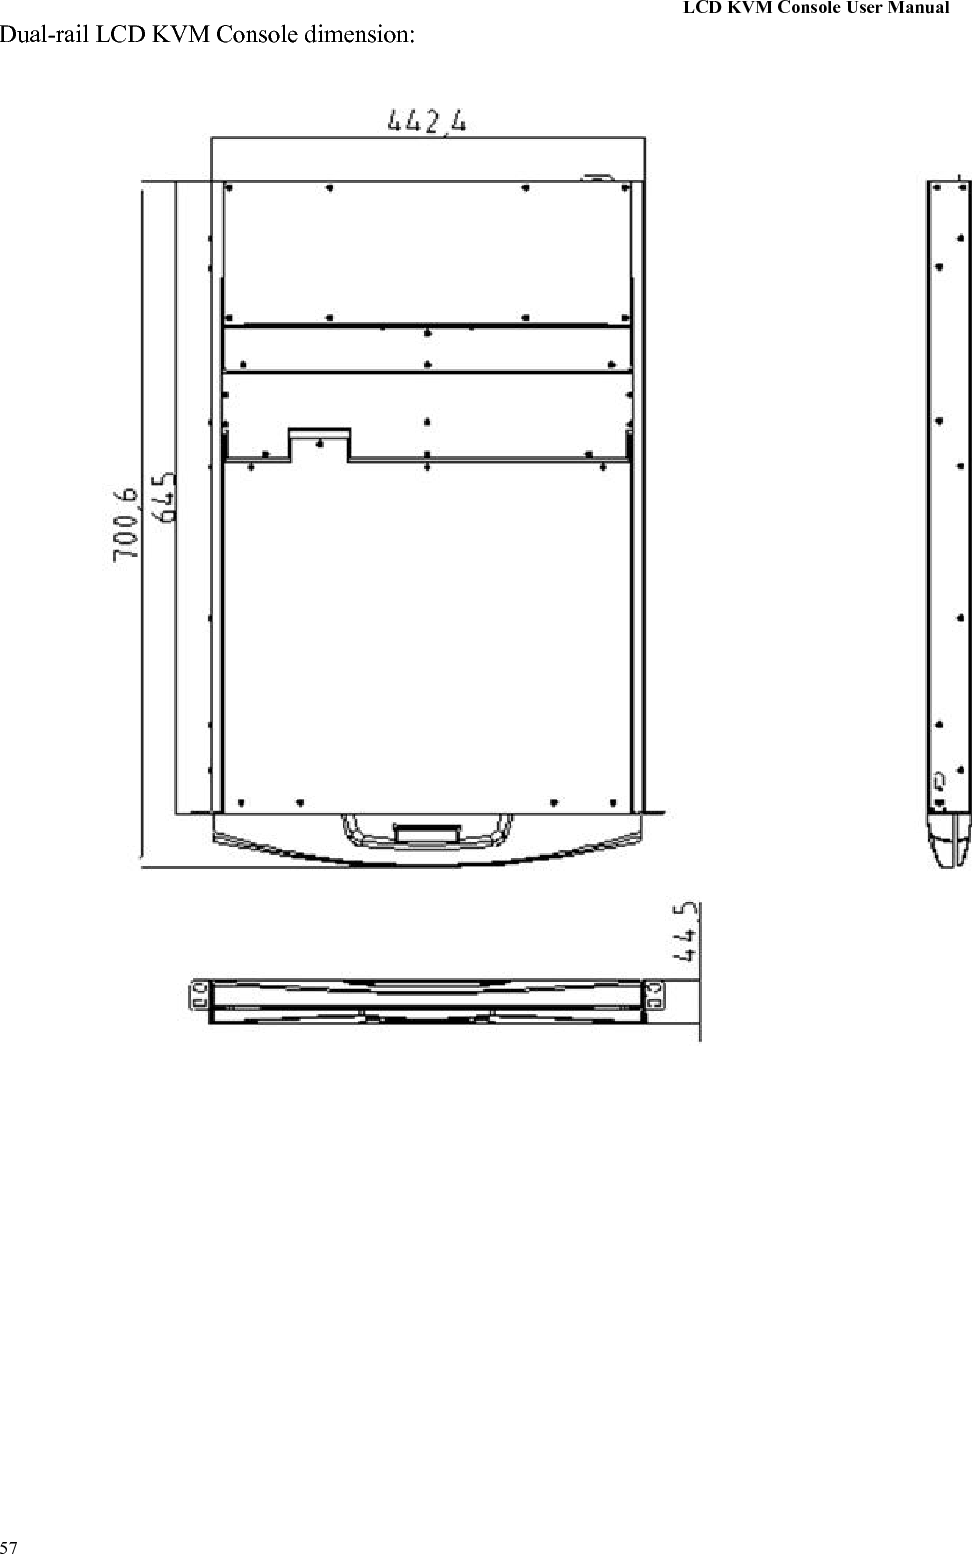 LCD KVM Console User Manual57Dual-rail LCD KVM Console dimension: